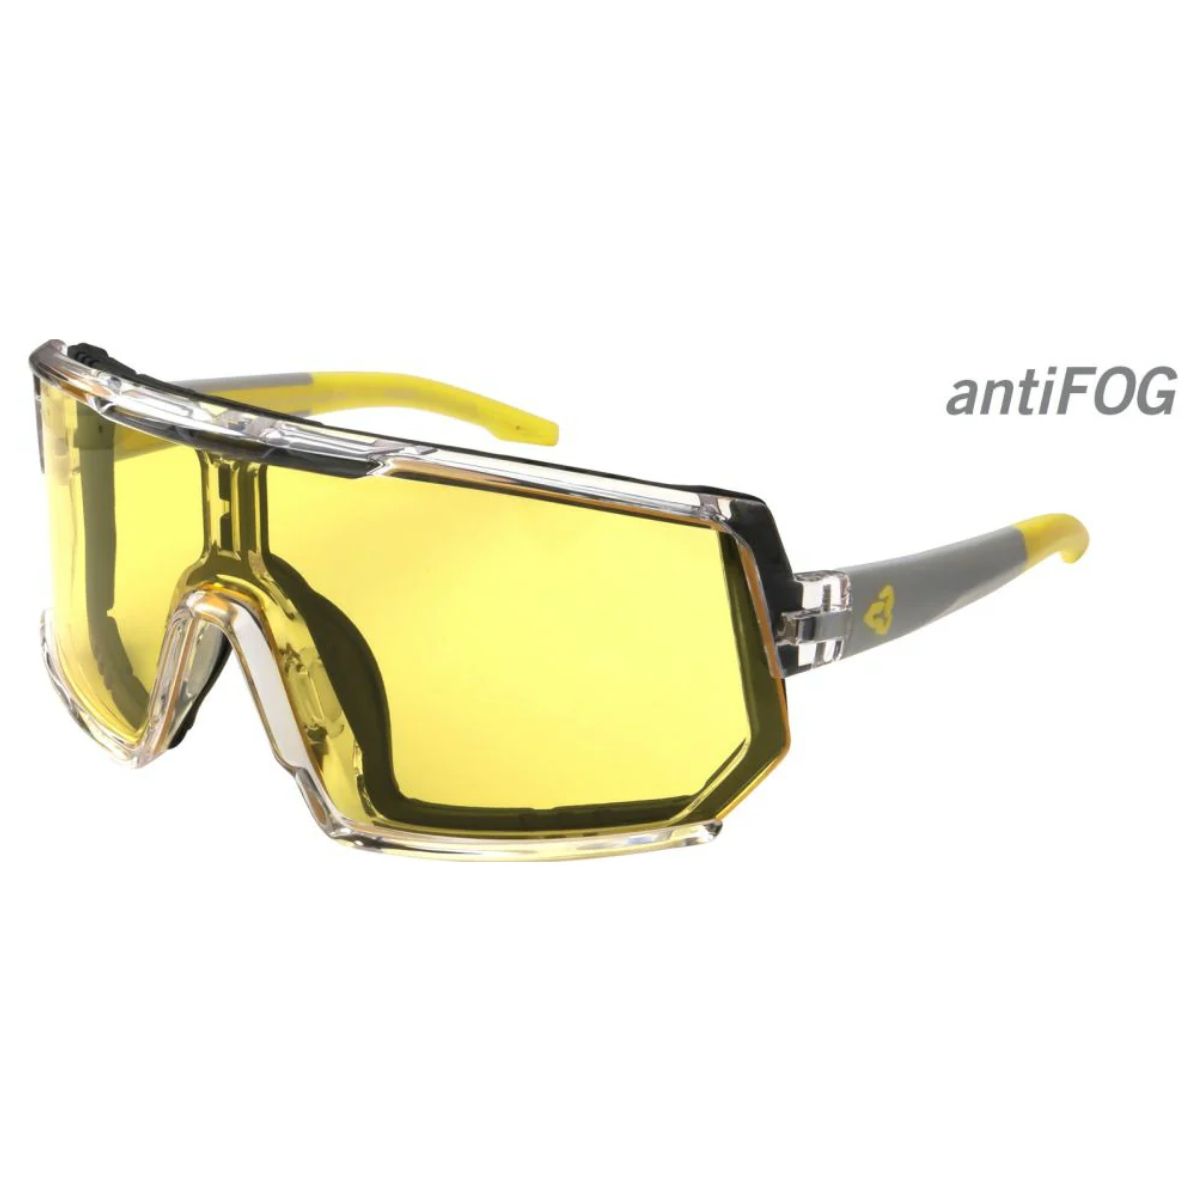 Ryder Escalator Eyewear Yellow Lenses with Antifog